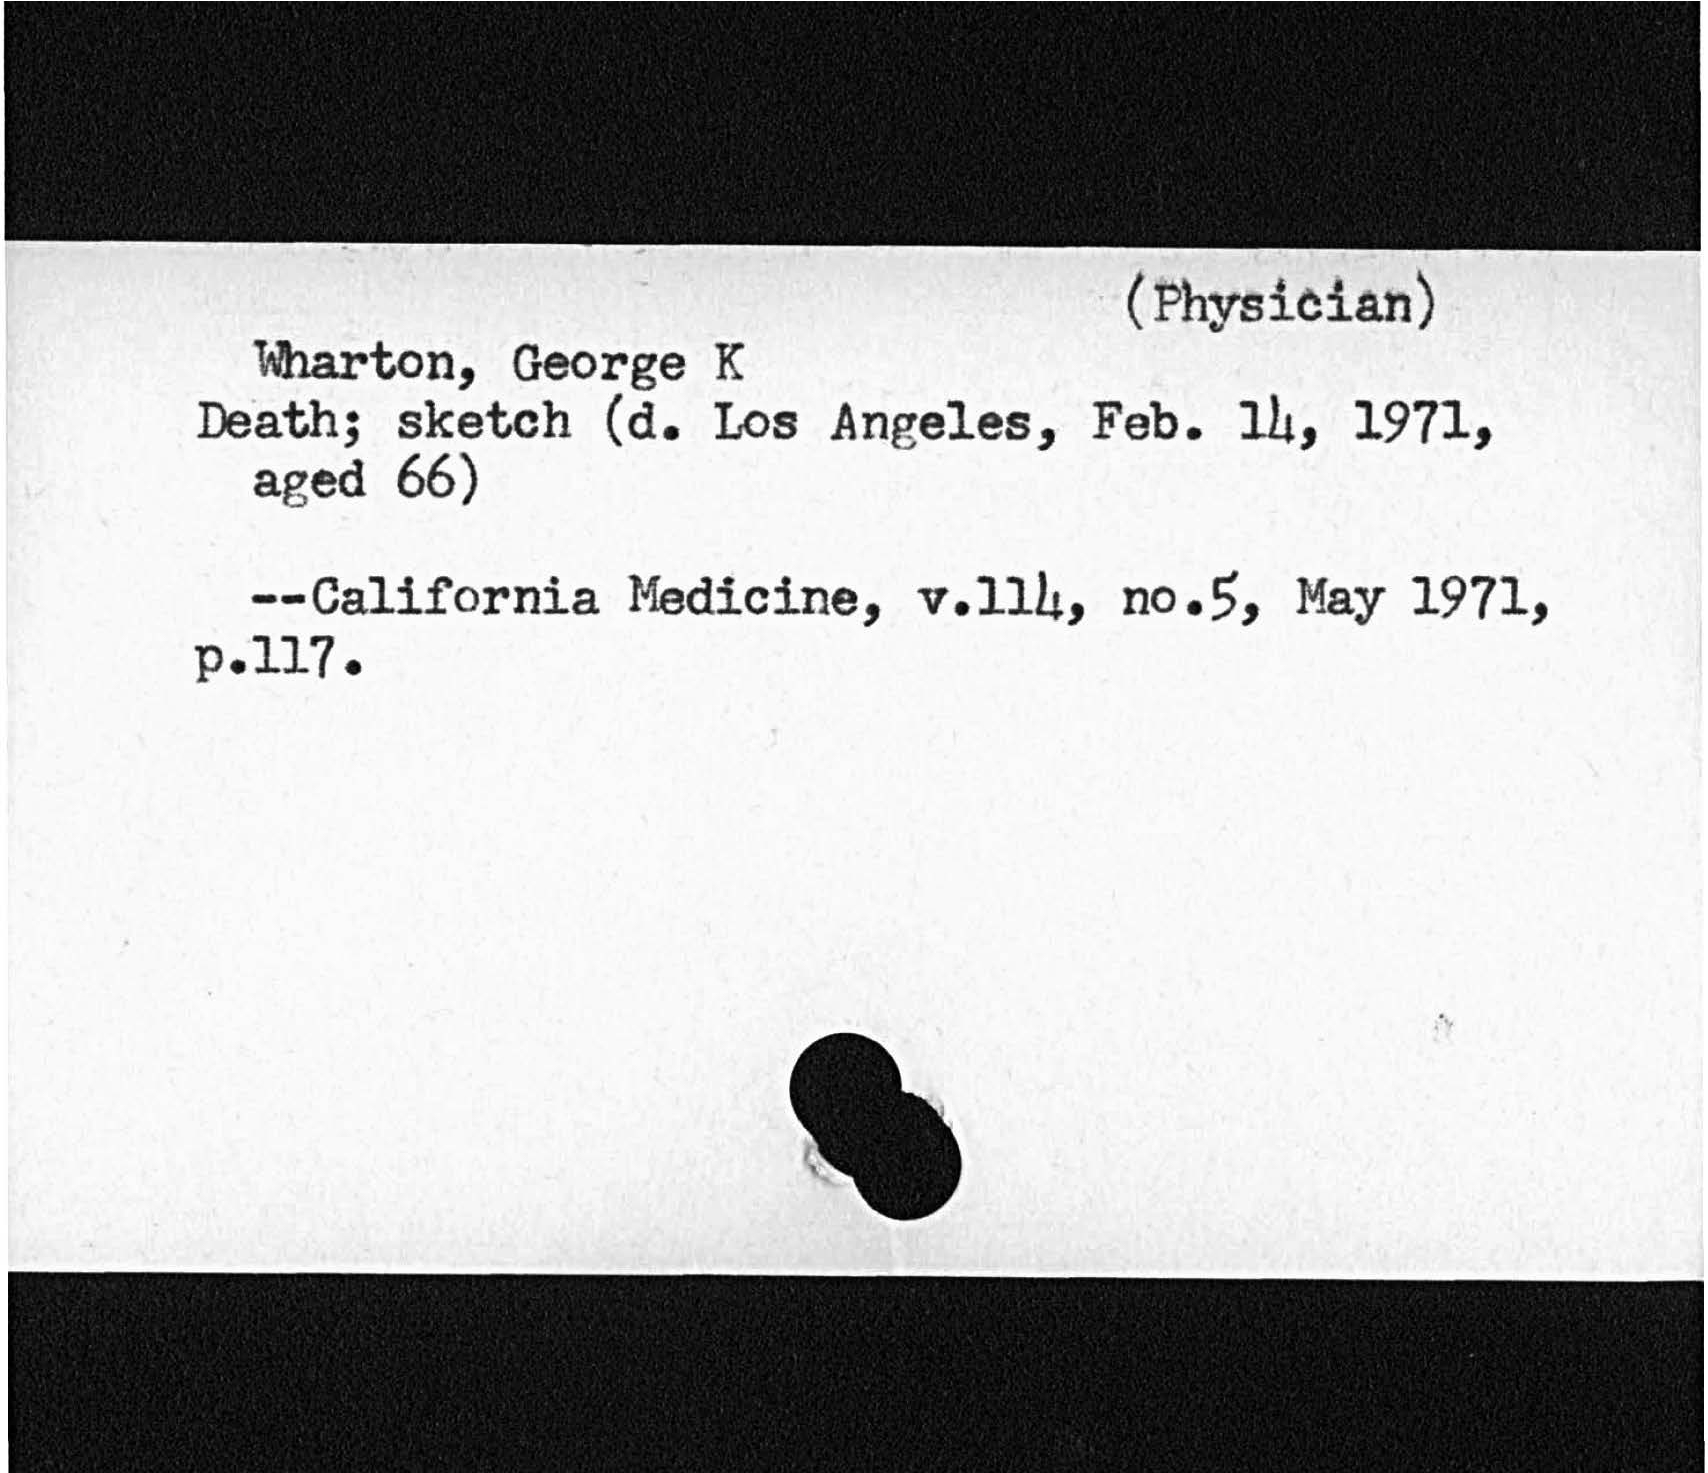 PhysicianWharton George KDeath; sketch d. Los Angeles, Feb. 14, 1971,aged 66California Medicine, v. Illus no. 5, May 1971,p. ll7.